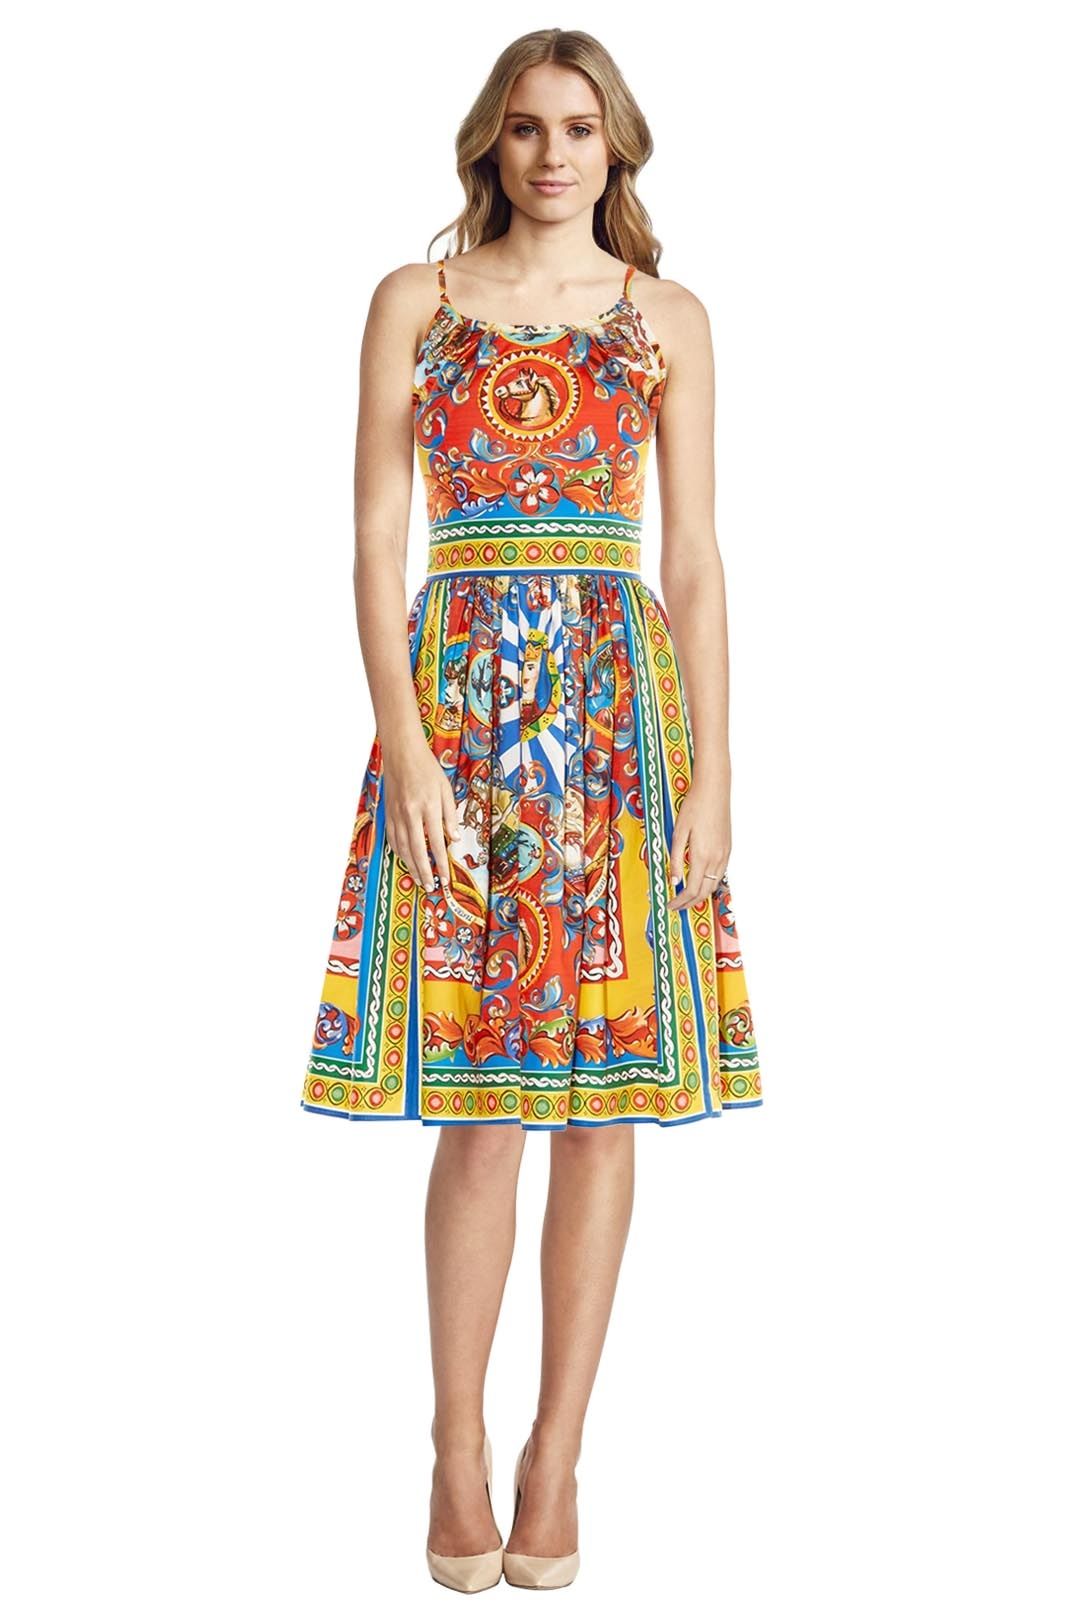 Dolce & Gabbana - Carretto Print Sleeveless Dress for Hire | GlamCorner